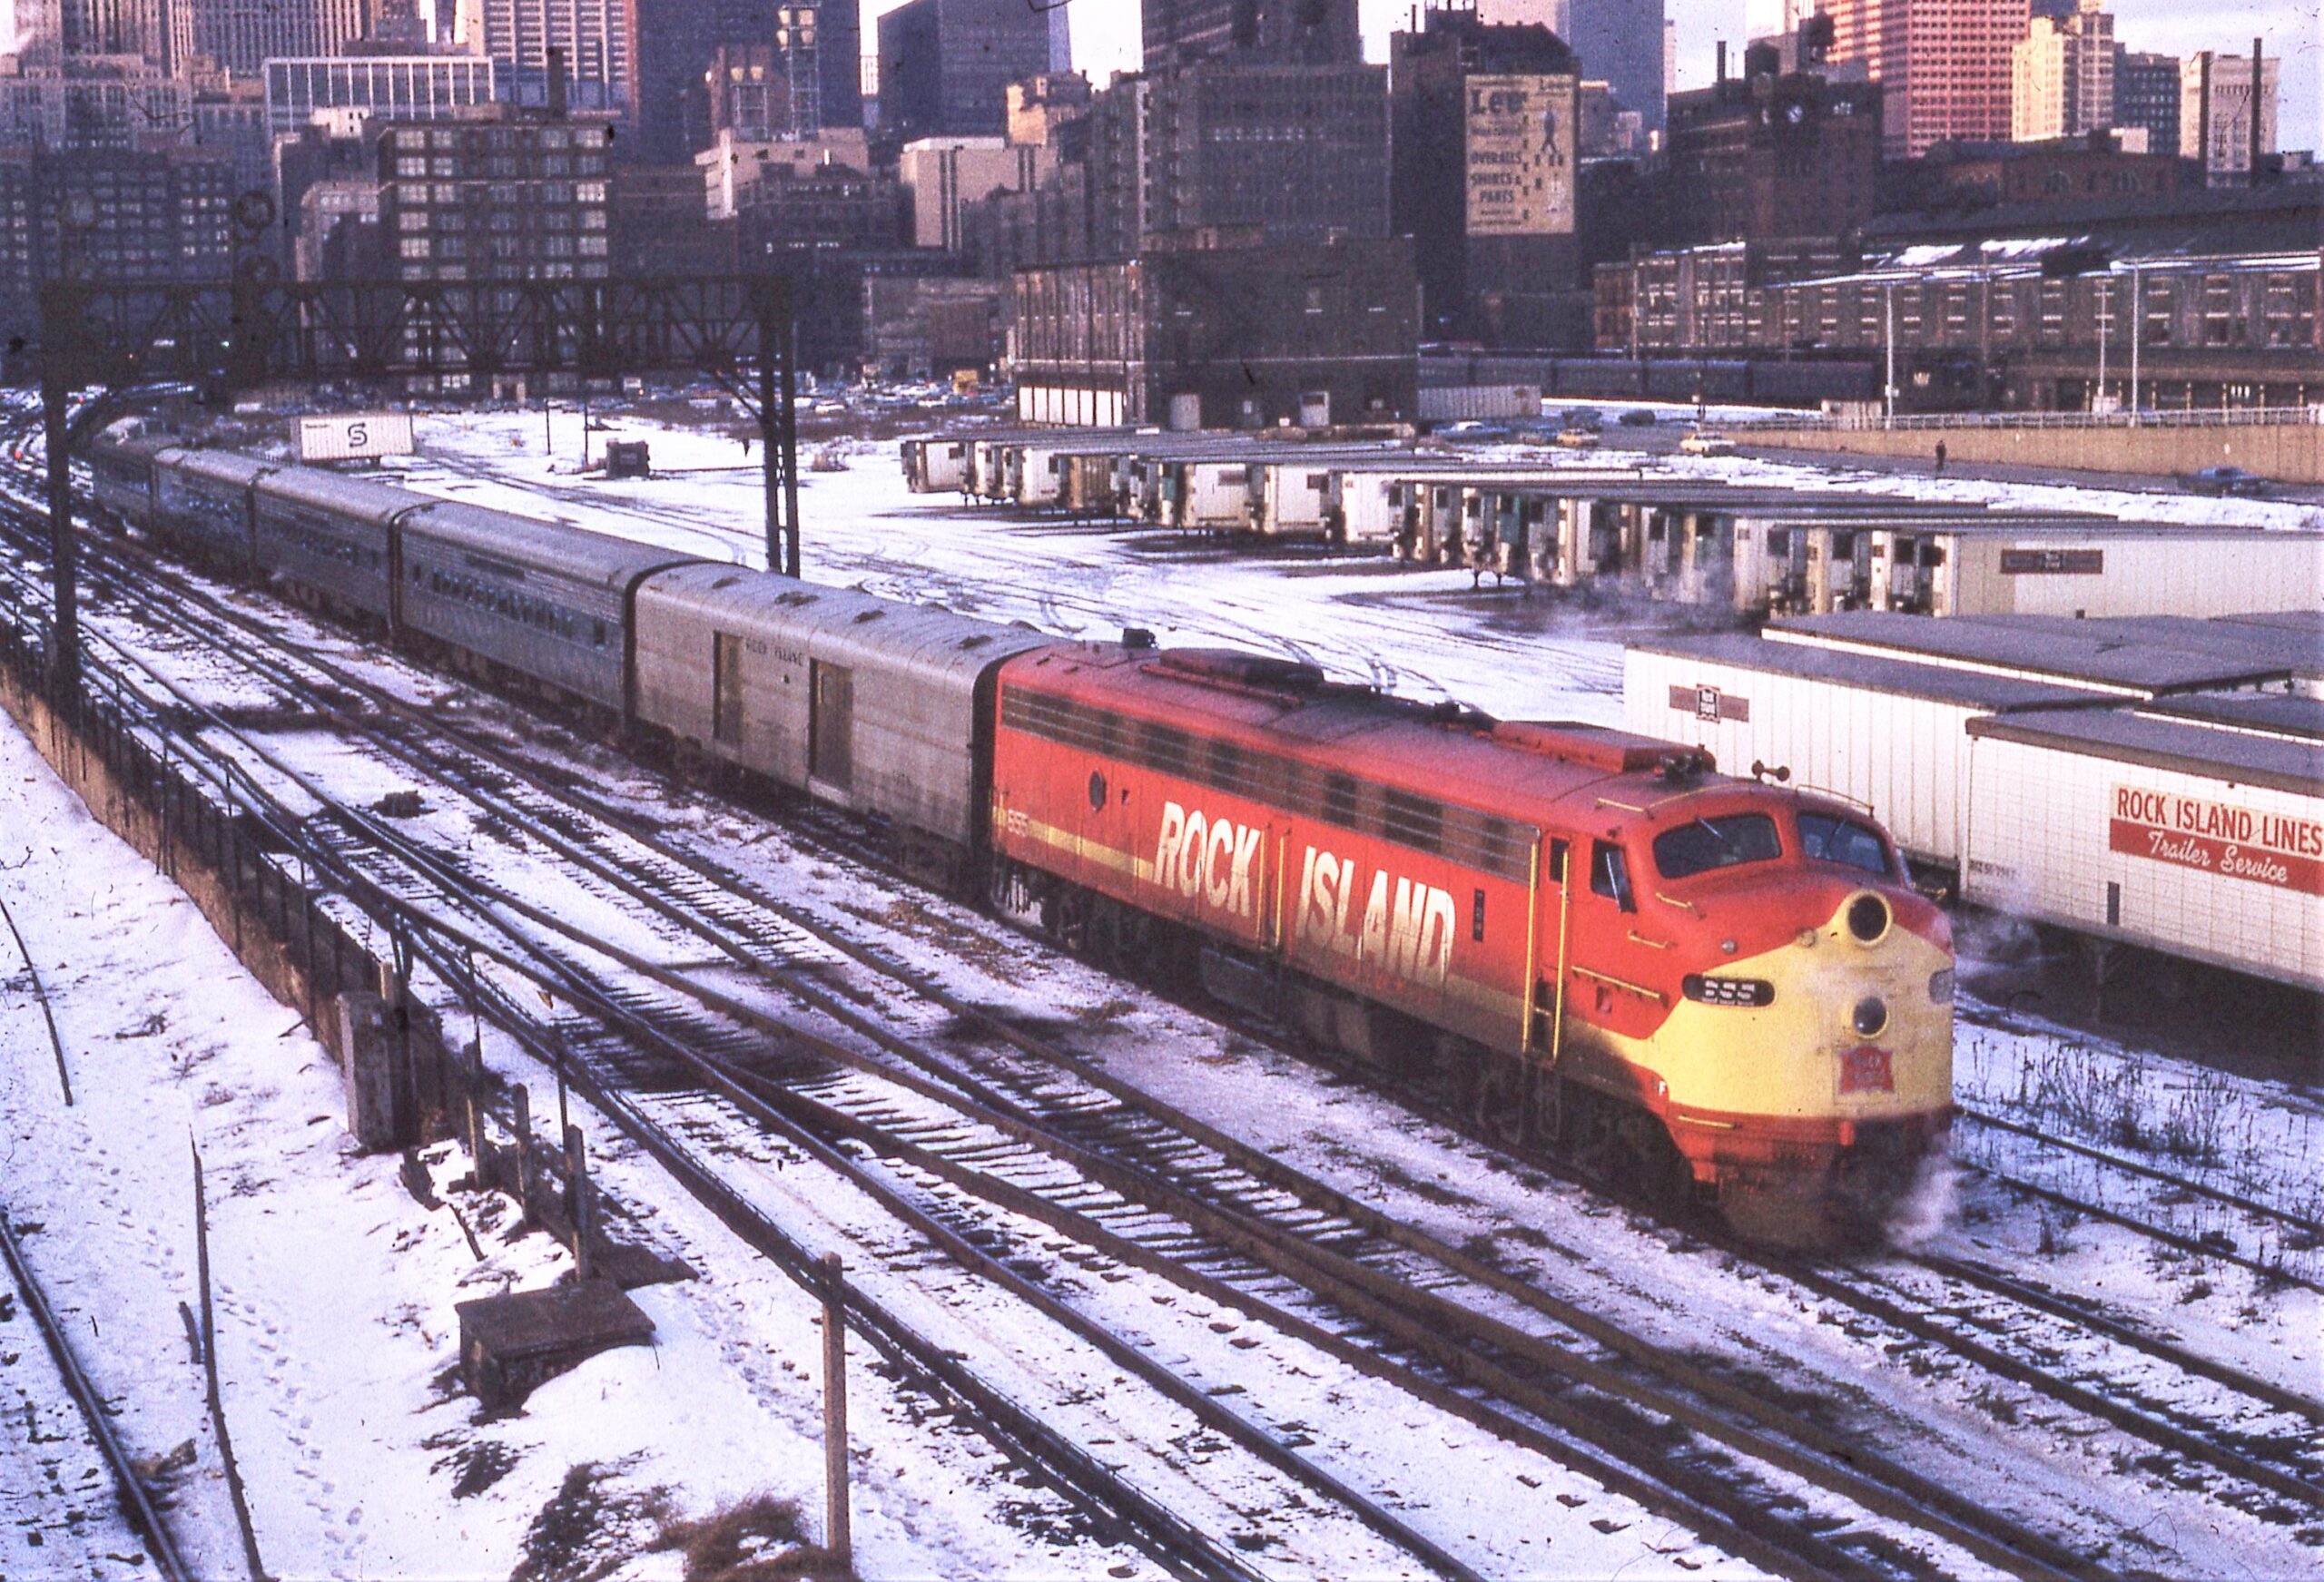 Chicago Rock Island and Pacific Railroad | Chicago, Illinois | EMD E8a #655 | Passenger train | February 23, 1973 | Emery Gulash photograph